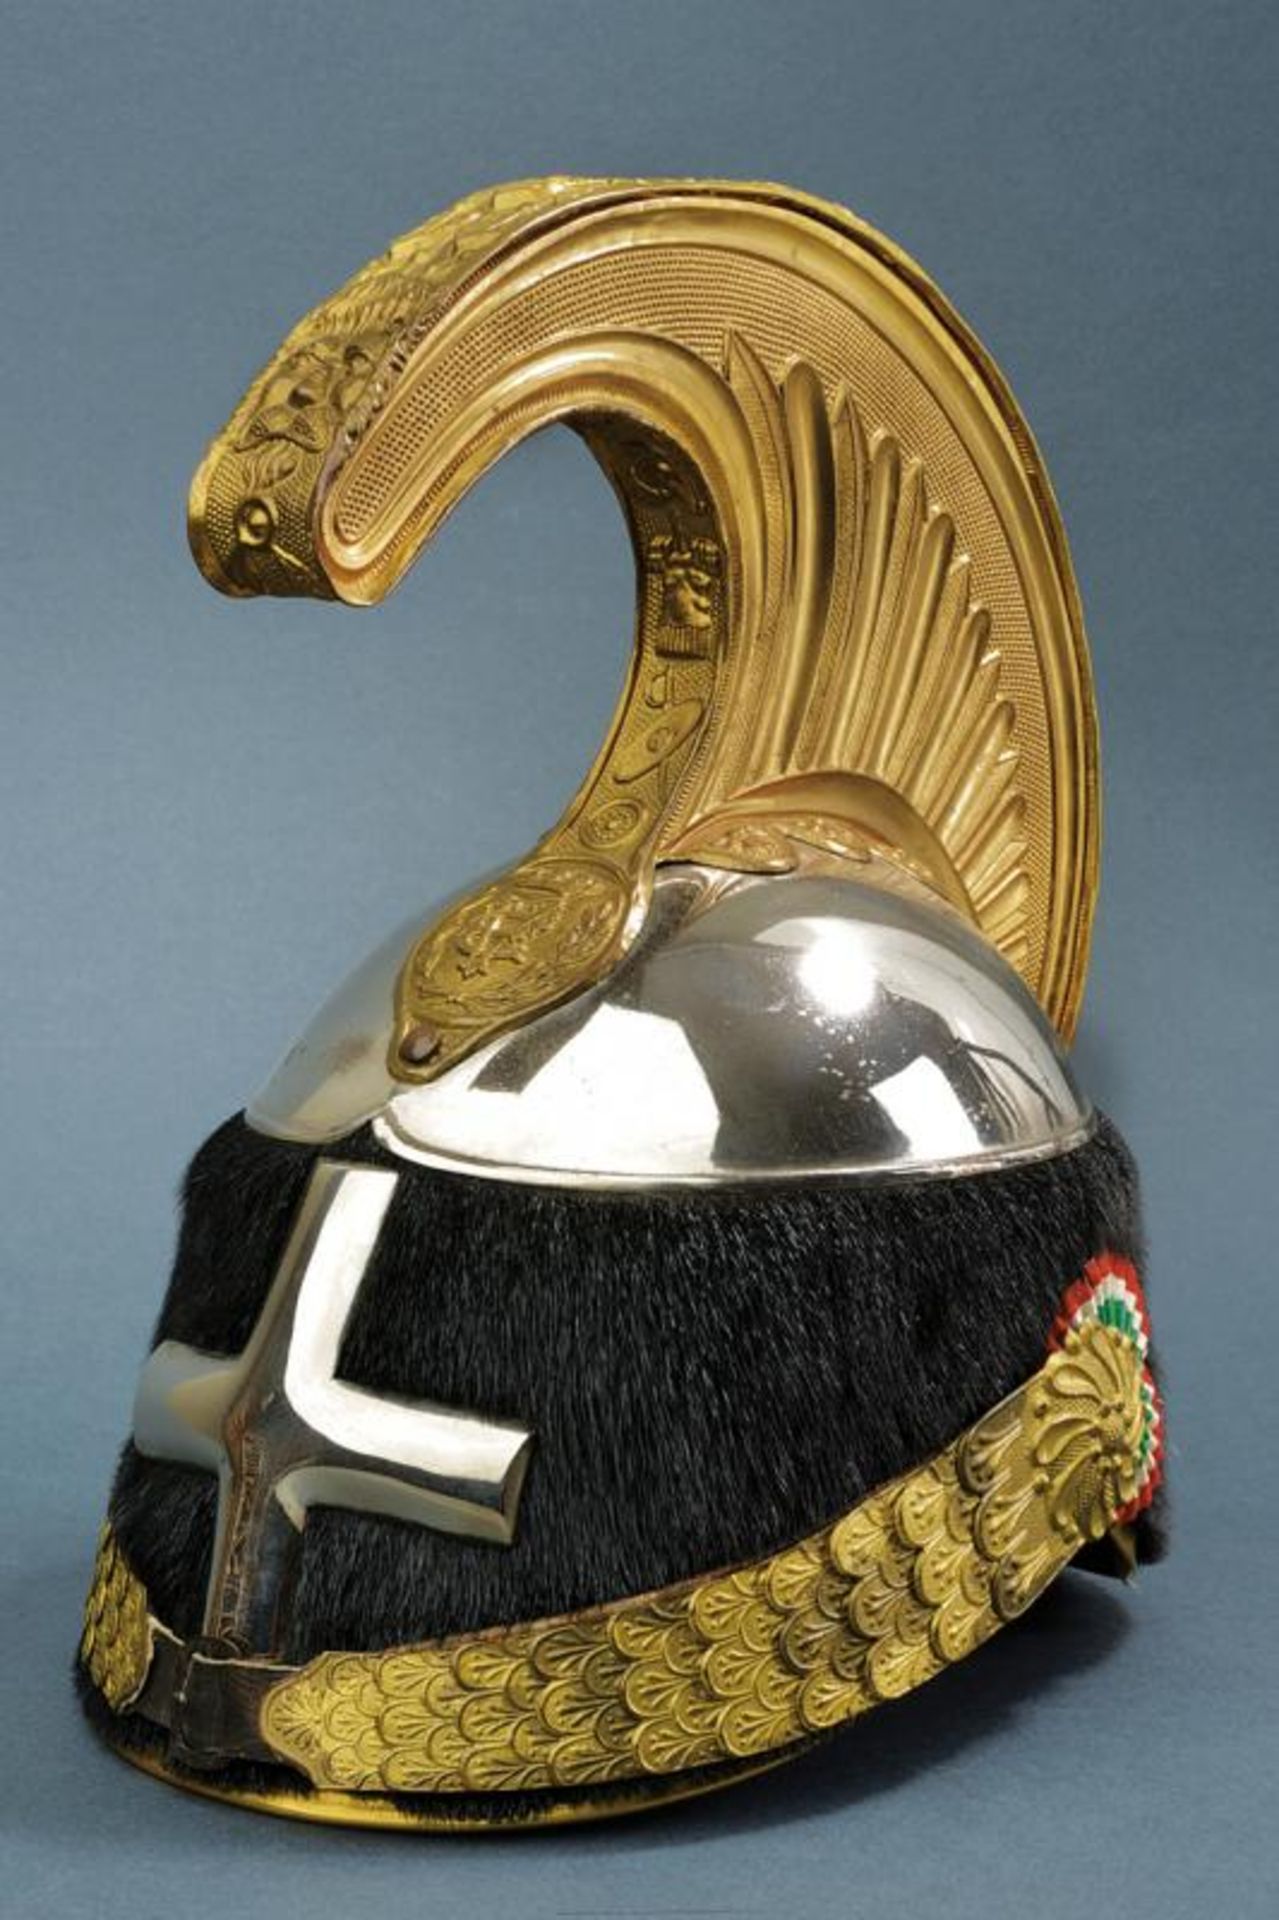 An officer's helmet of the first Nizza Cavalleria Regiment